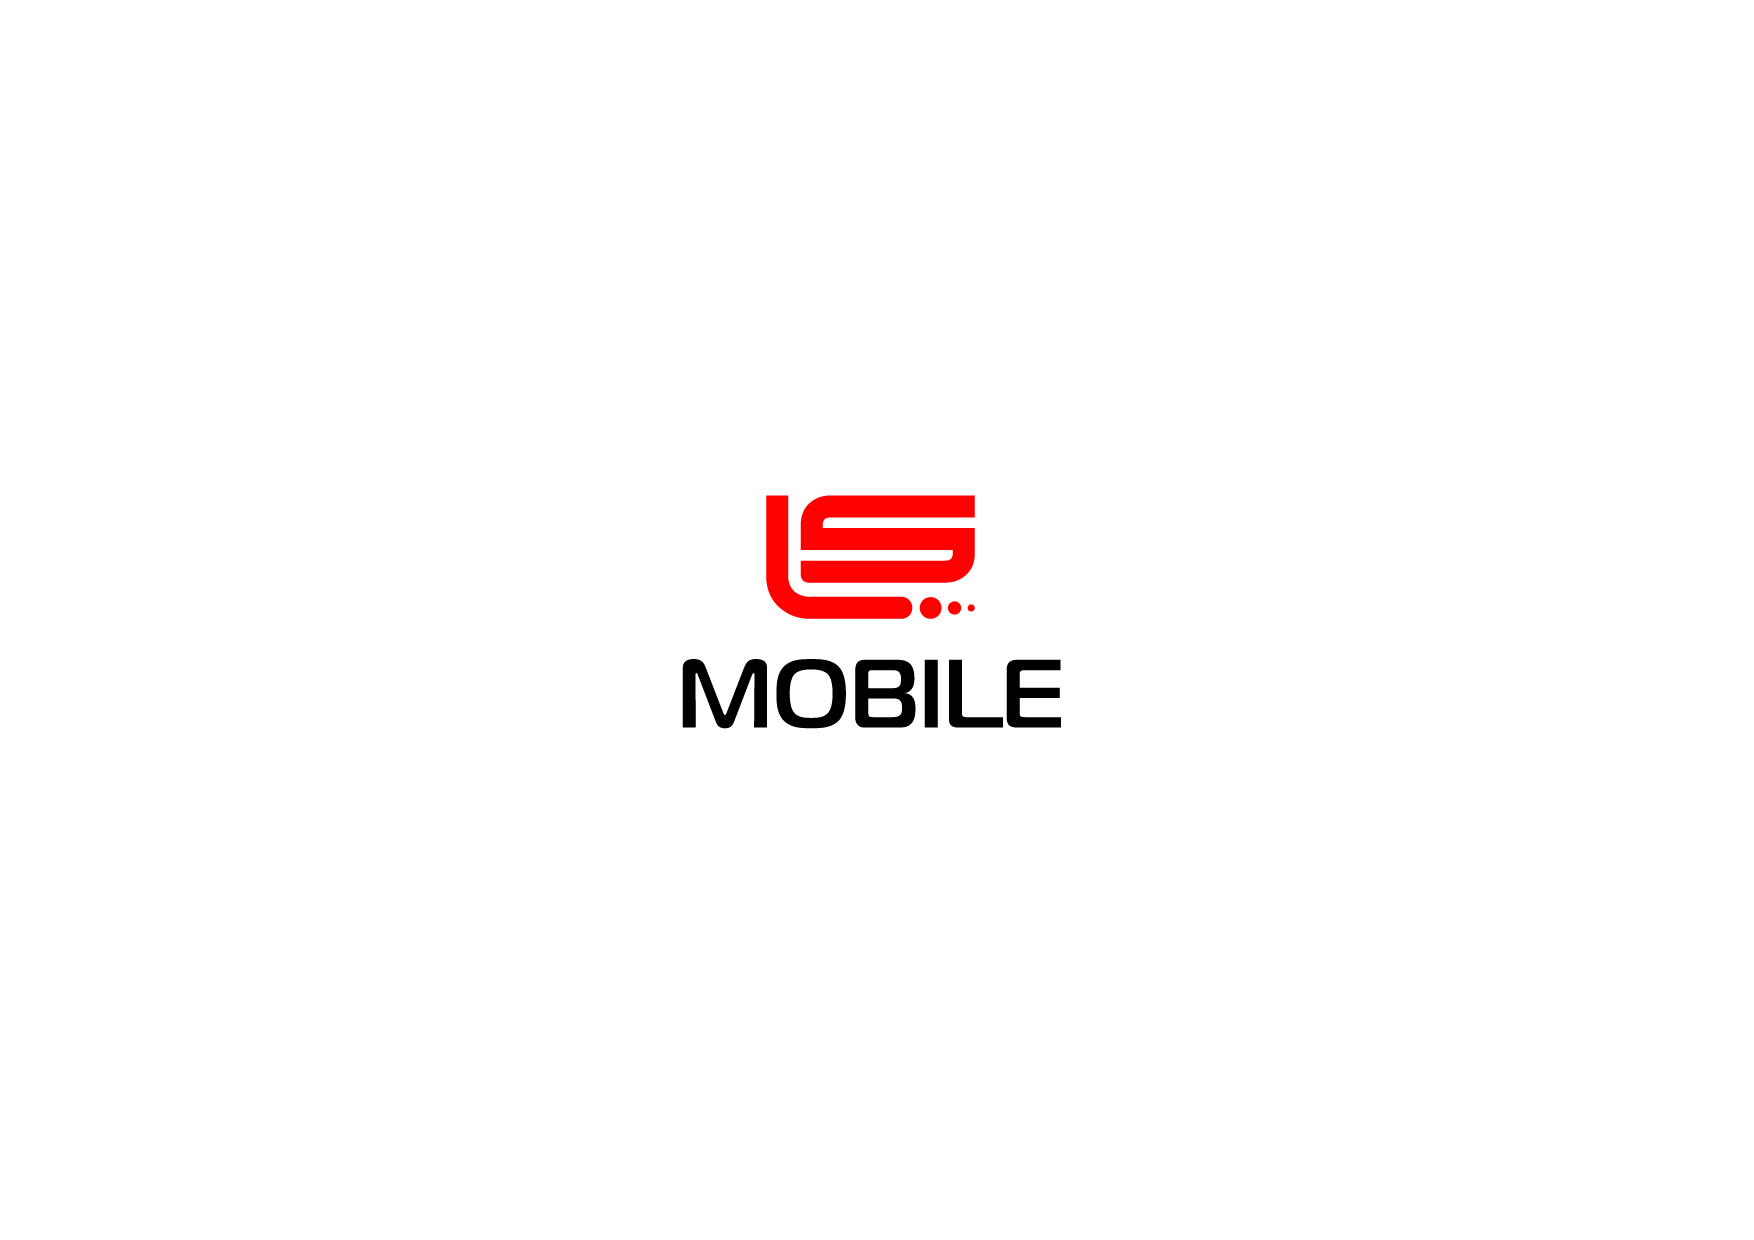 Site mobiles ru